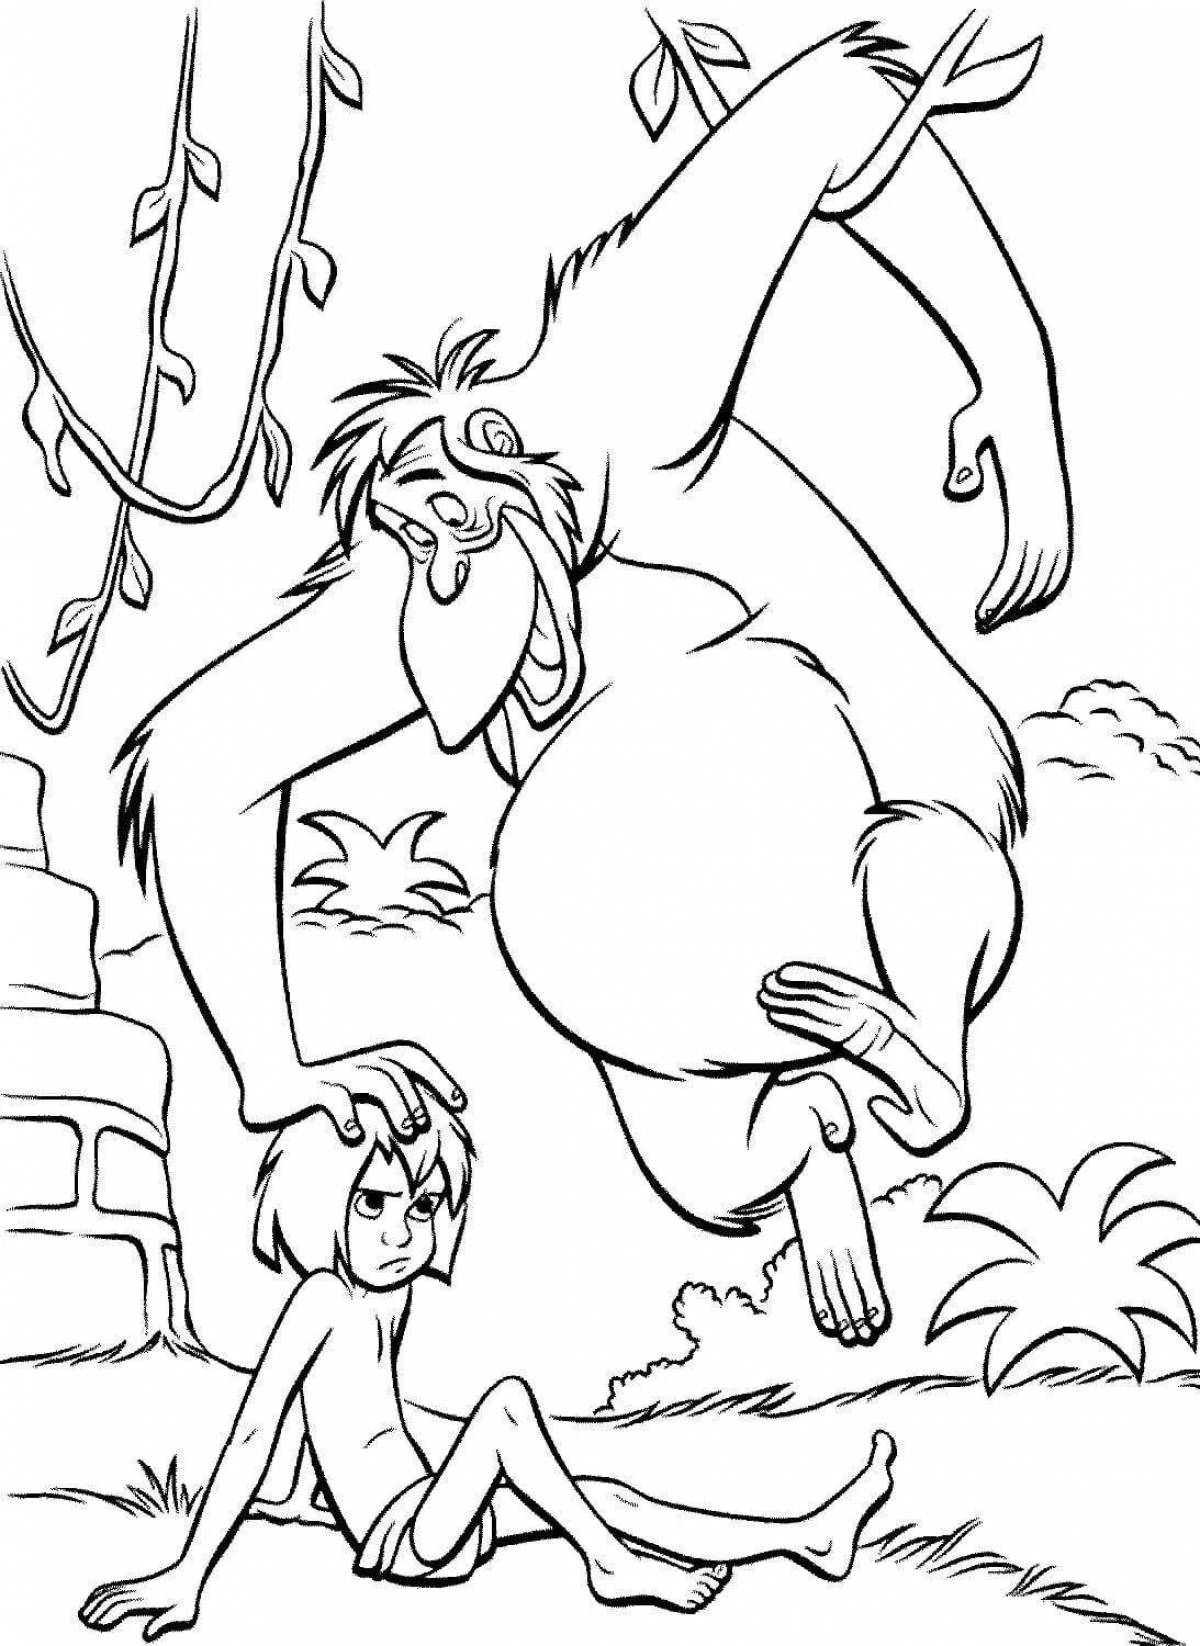 Coloring page playful mowgli